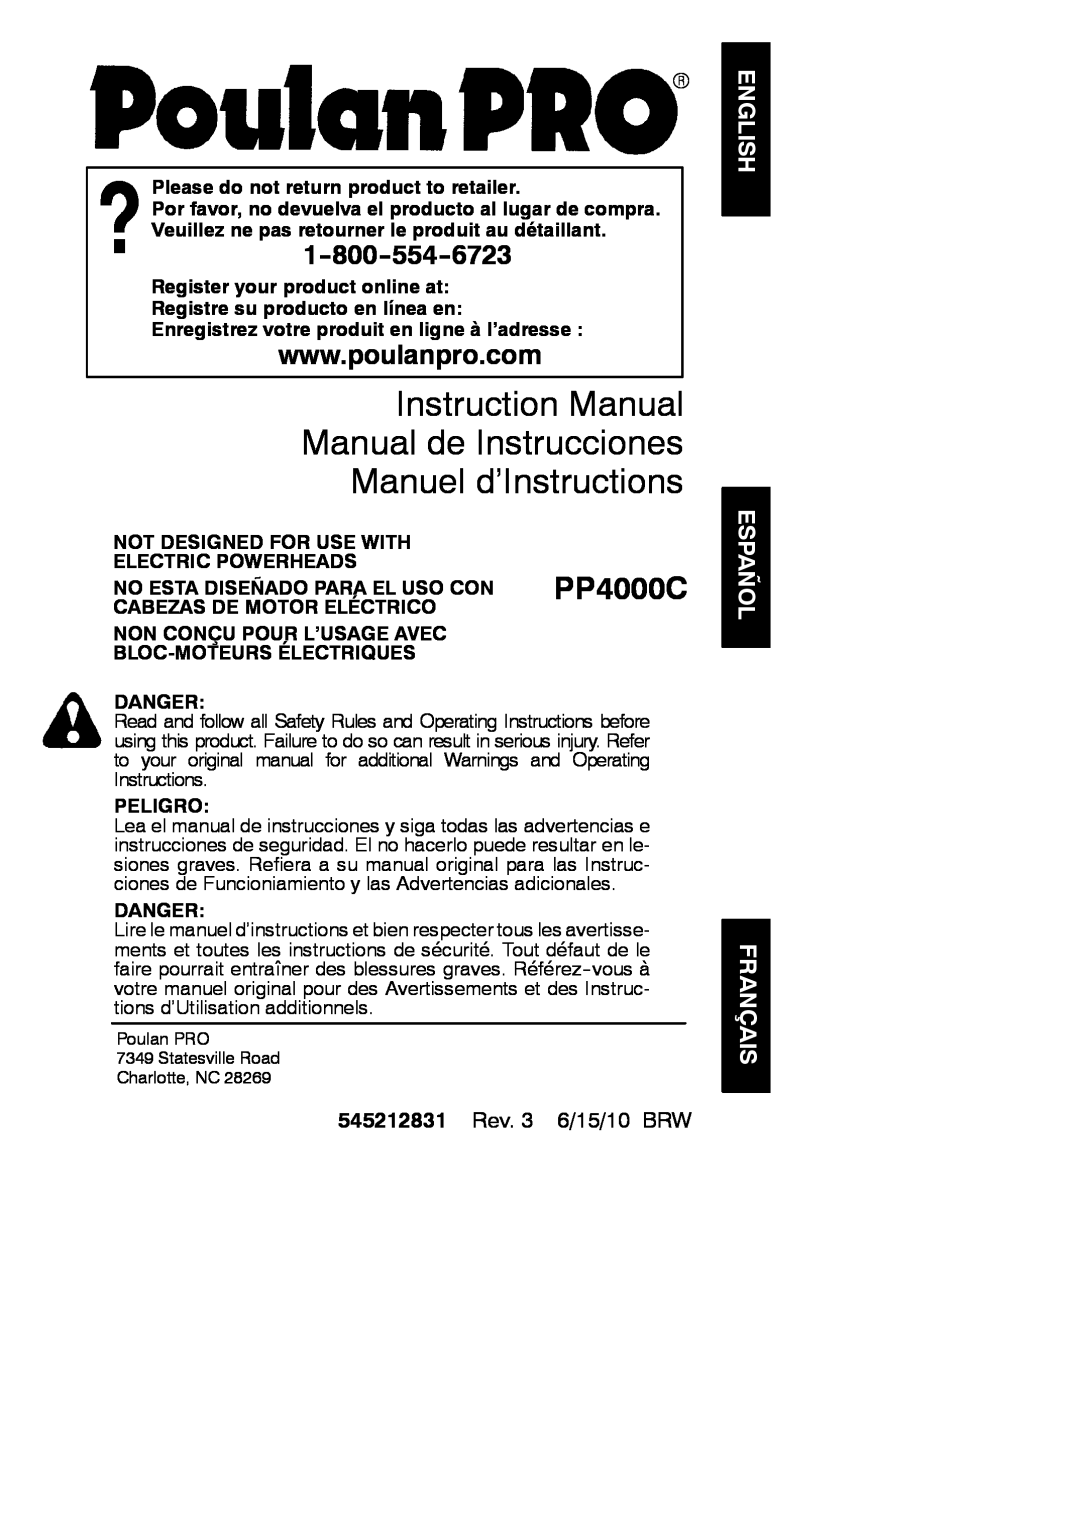 Poulan 545212831 instruction manual Please do not return product to retailer, Danger, Peligro, English Español Français 